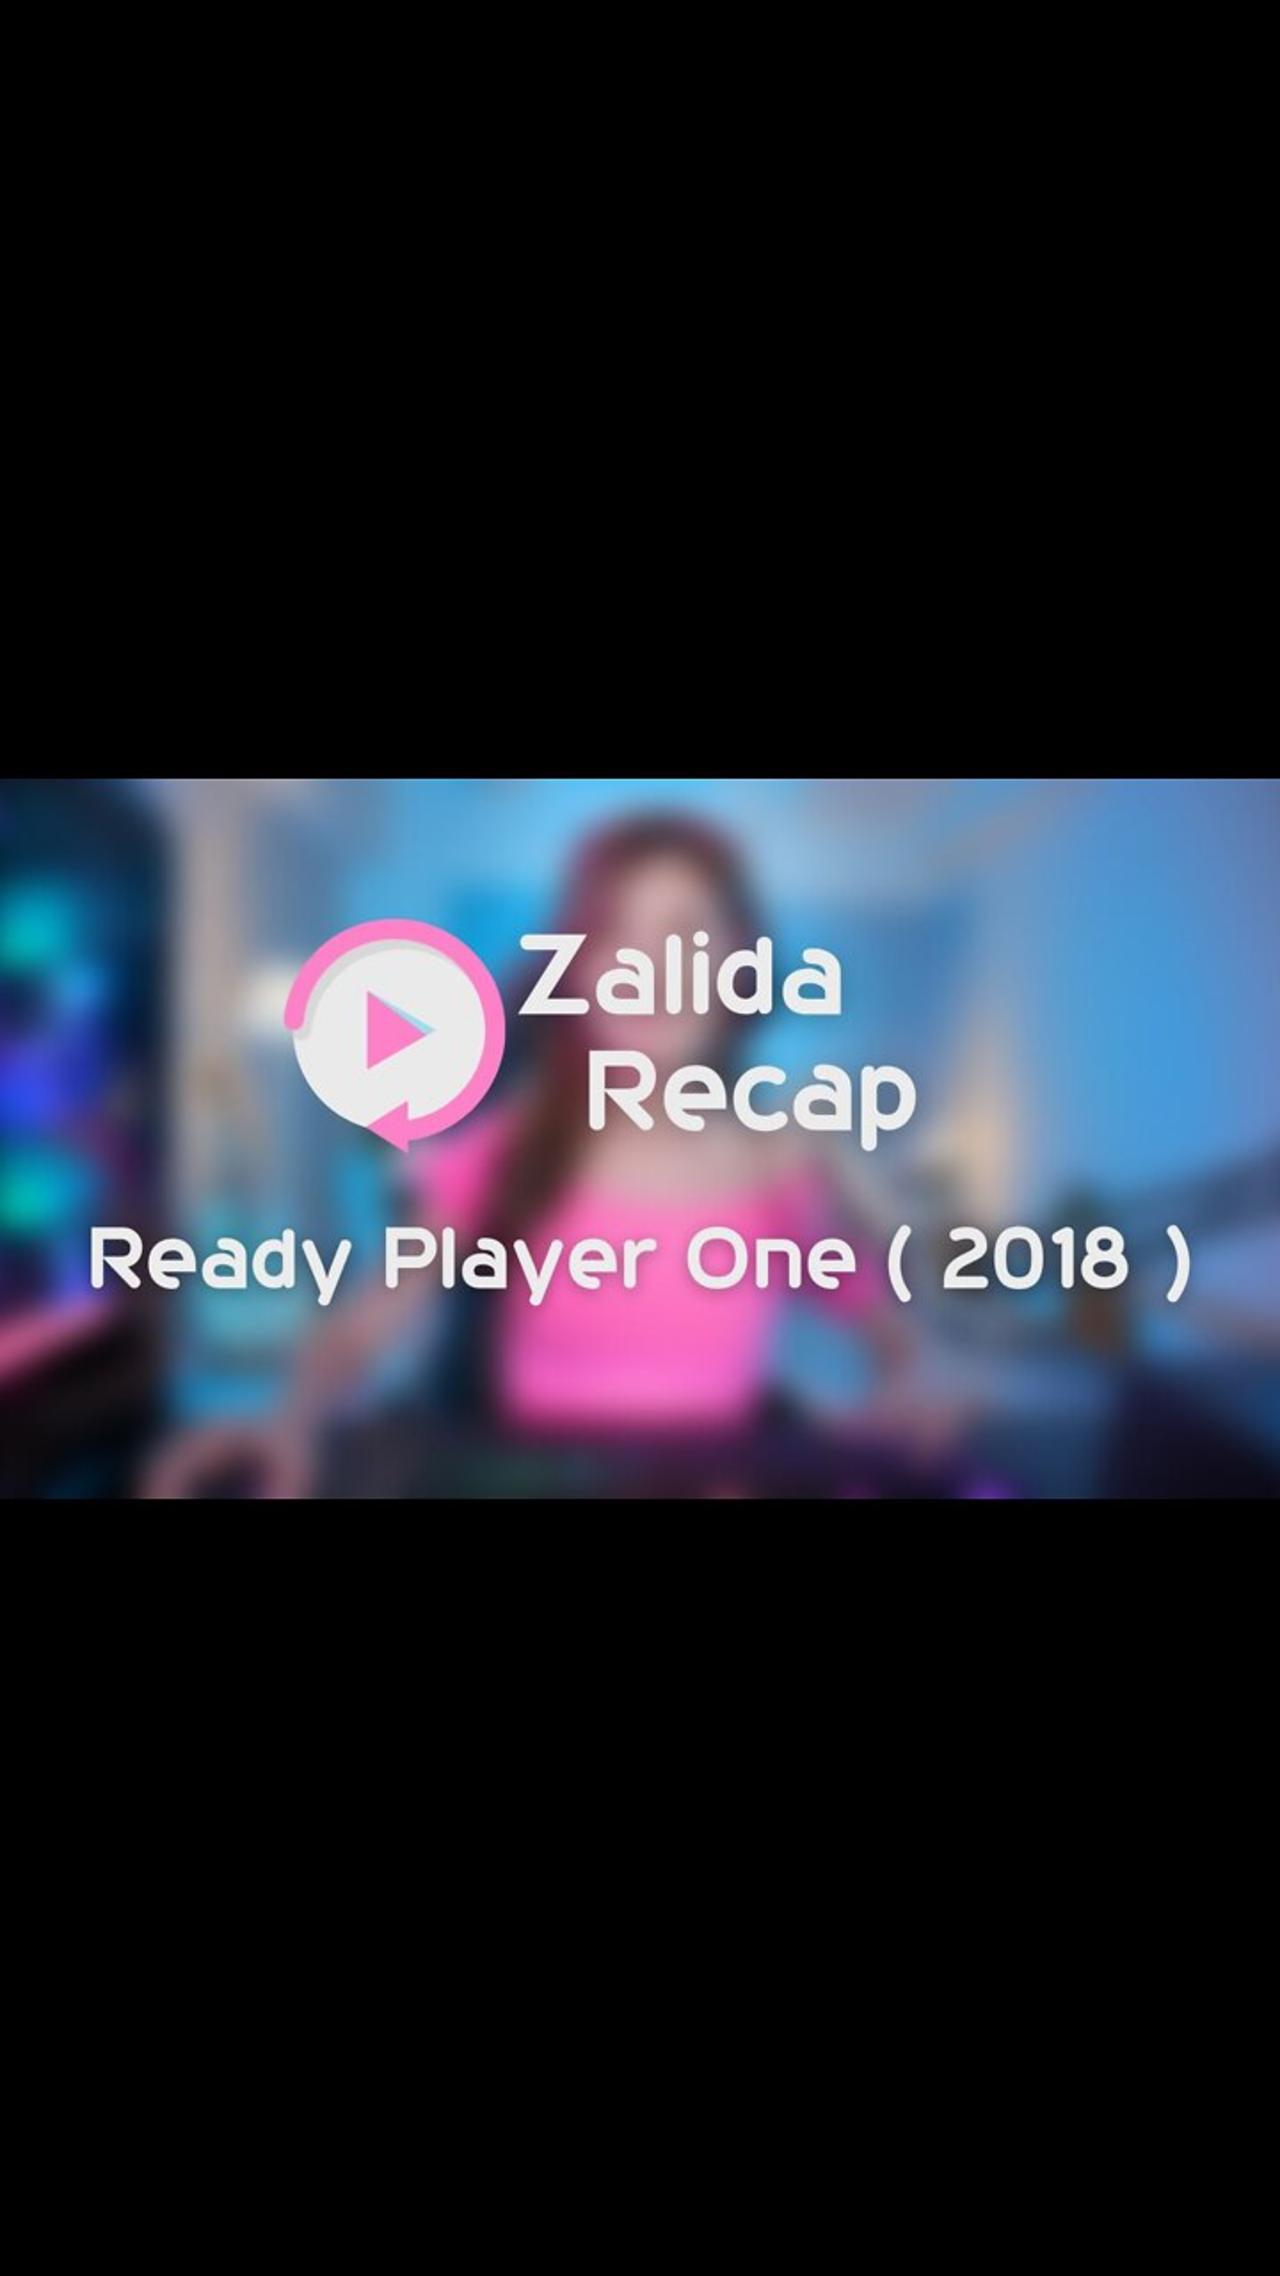 Ready Player One ( 2018 ) - Movie Recap Summary